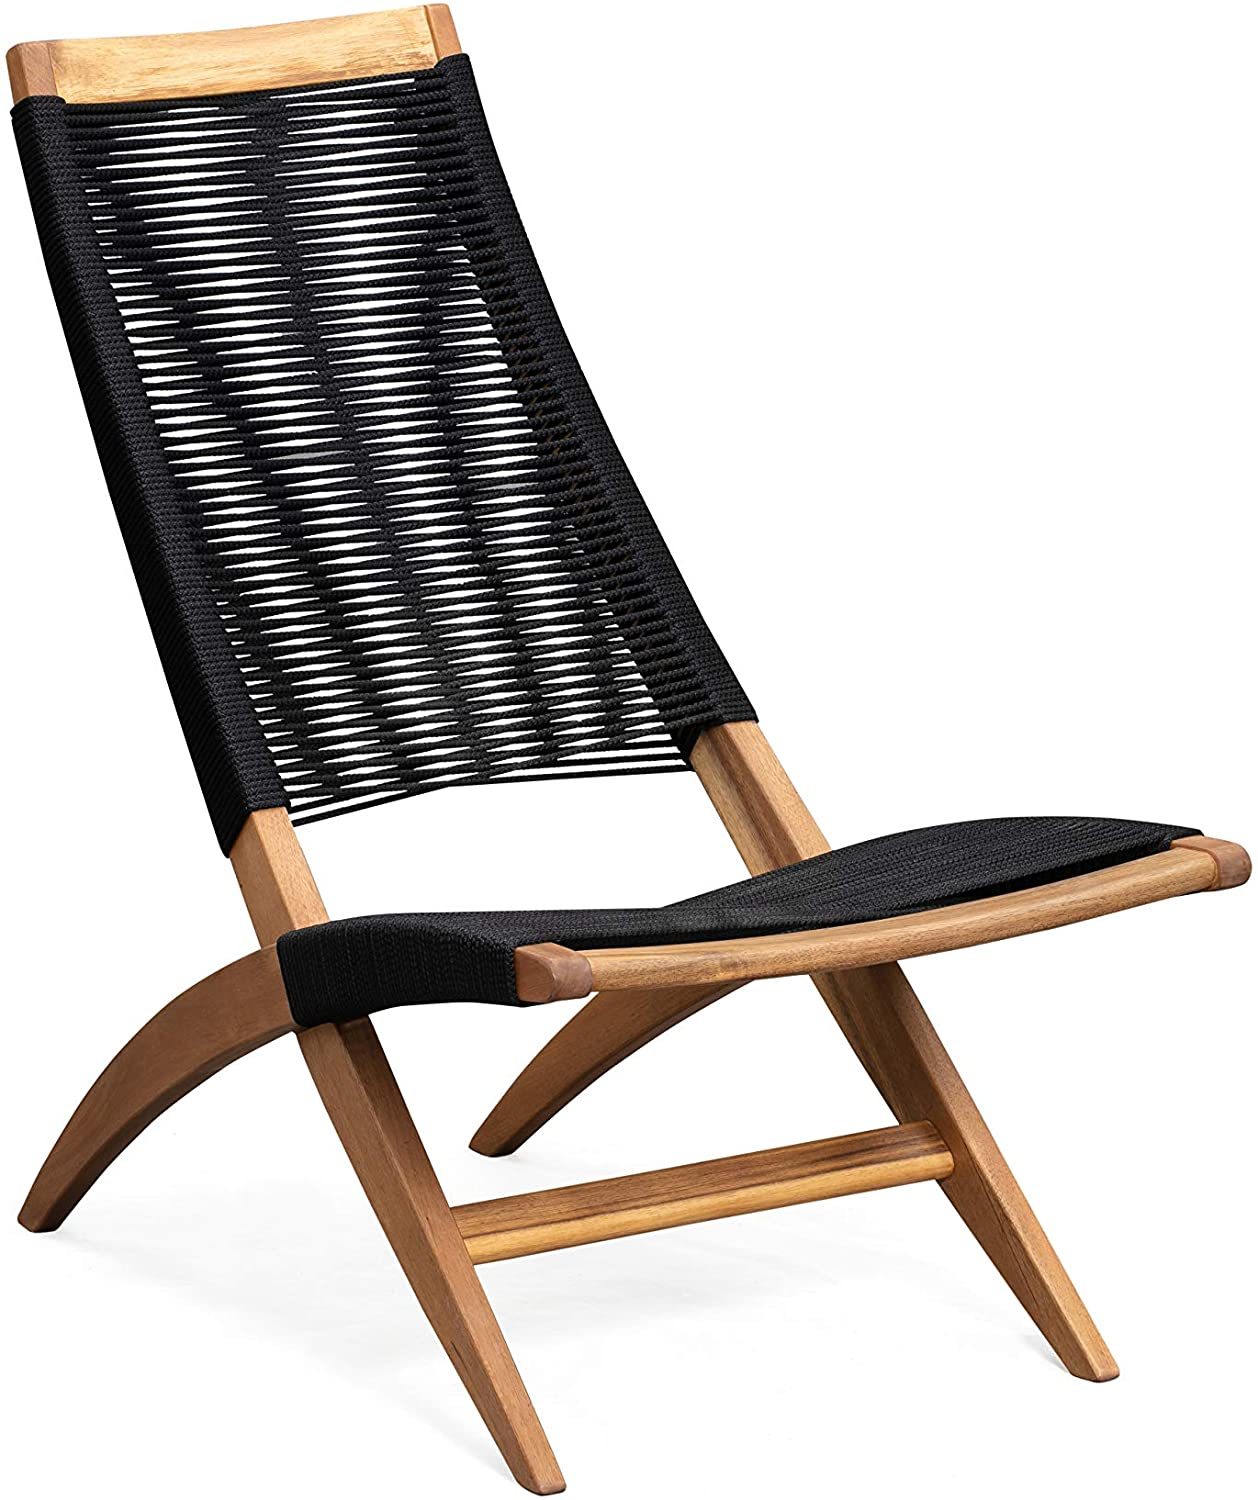 Patio Sense Lisa Lounge Chair | Natural Wood Finish | Mid-Century Modern Wooden - $198.99